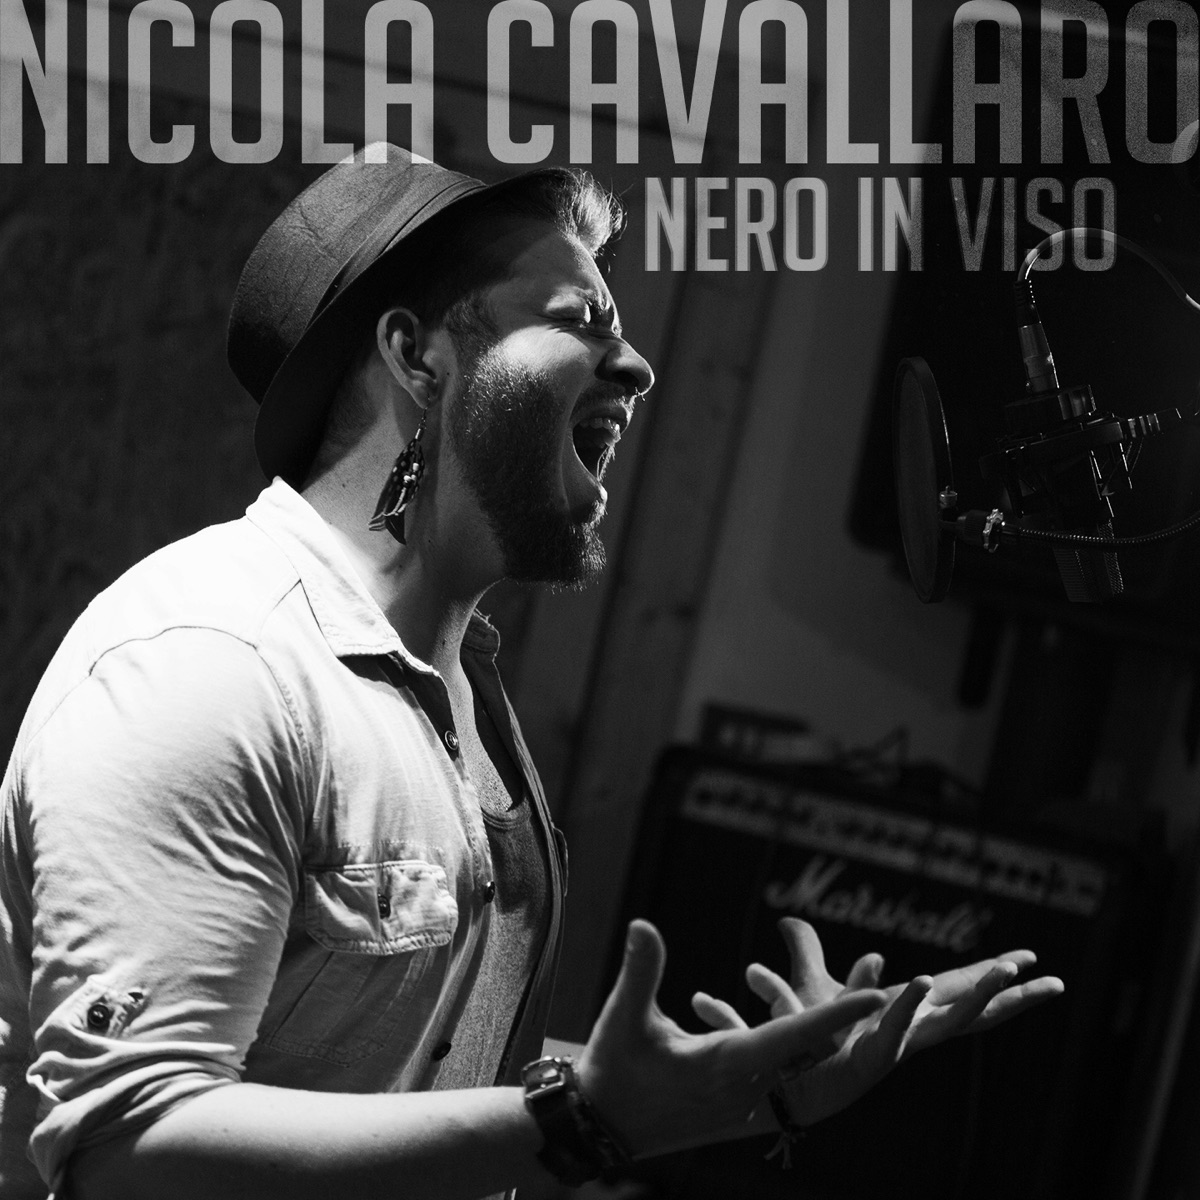 Bella Ciao - Single by Nicola Cavallaro on Apple Music